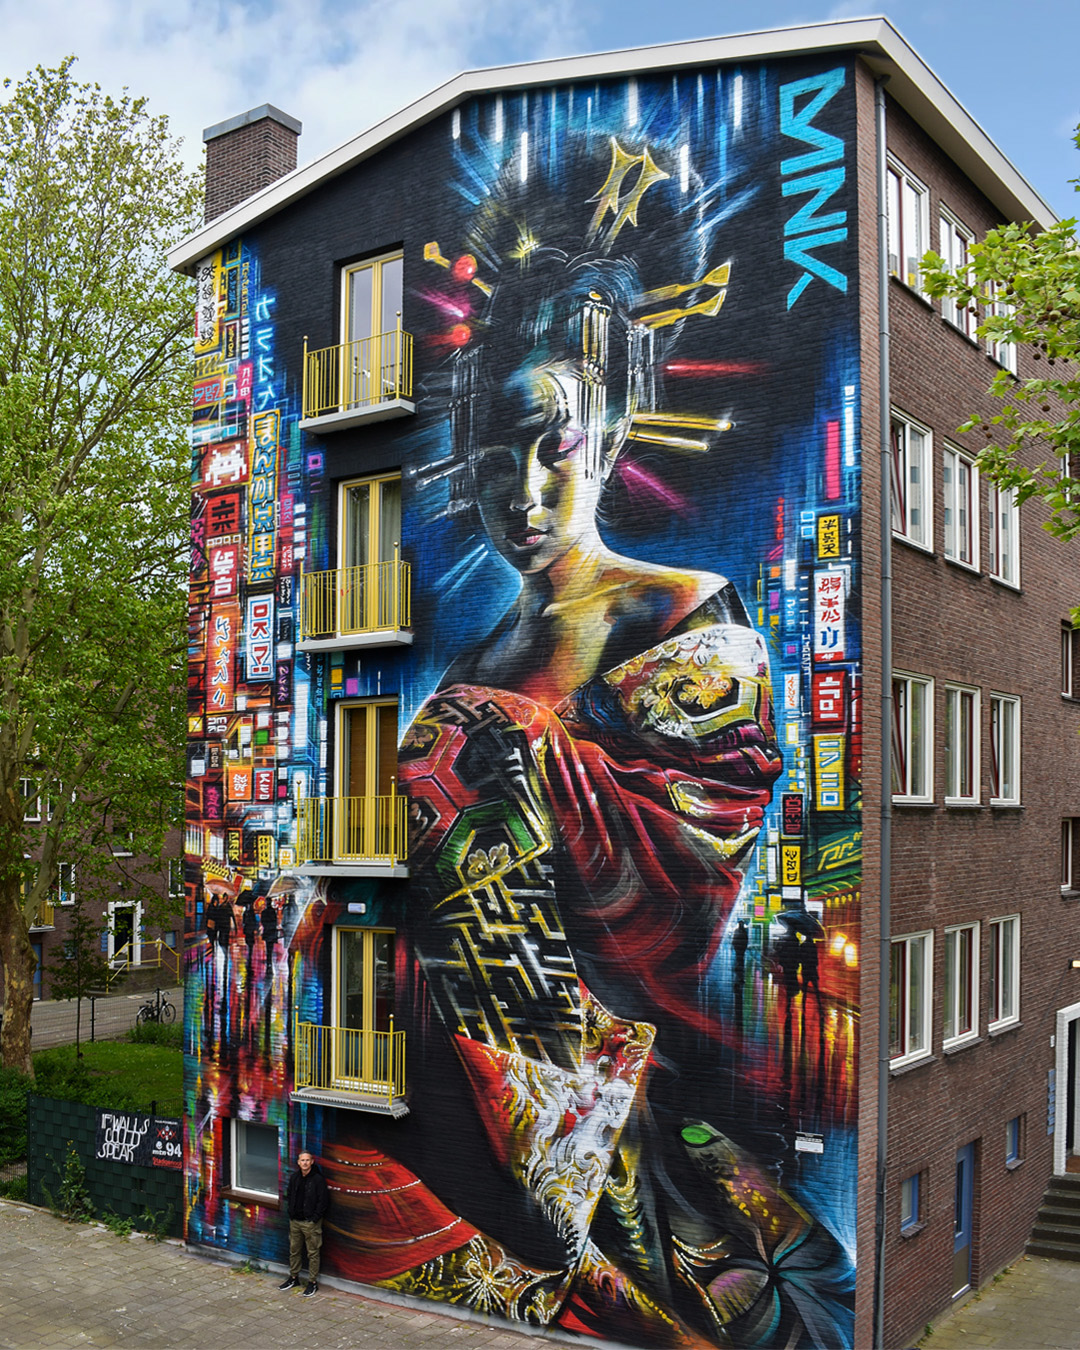 Dan Kitchener for "If Walls Could Speak" festival by Amsterdam Street Art